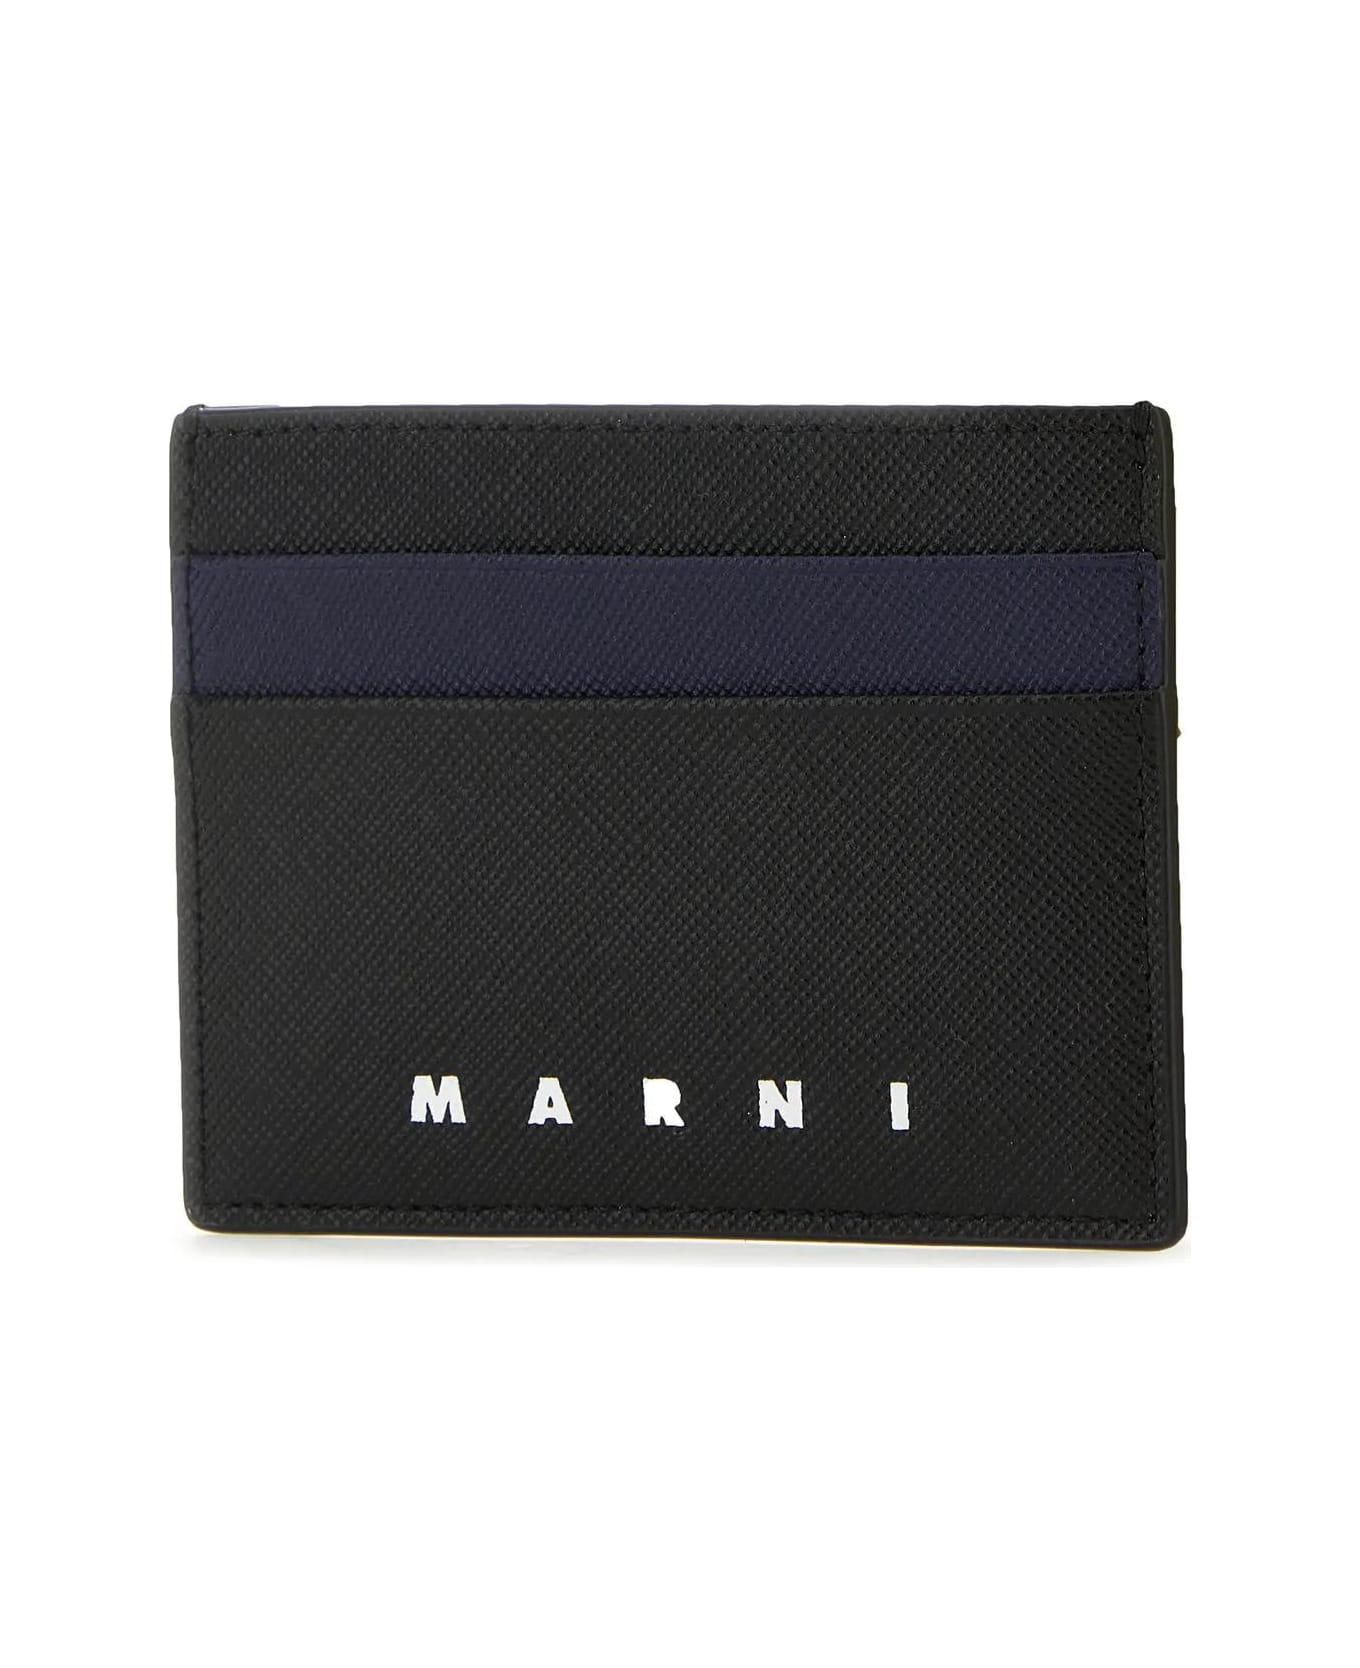 Marni Black Leather Card Holder - Z576N